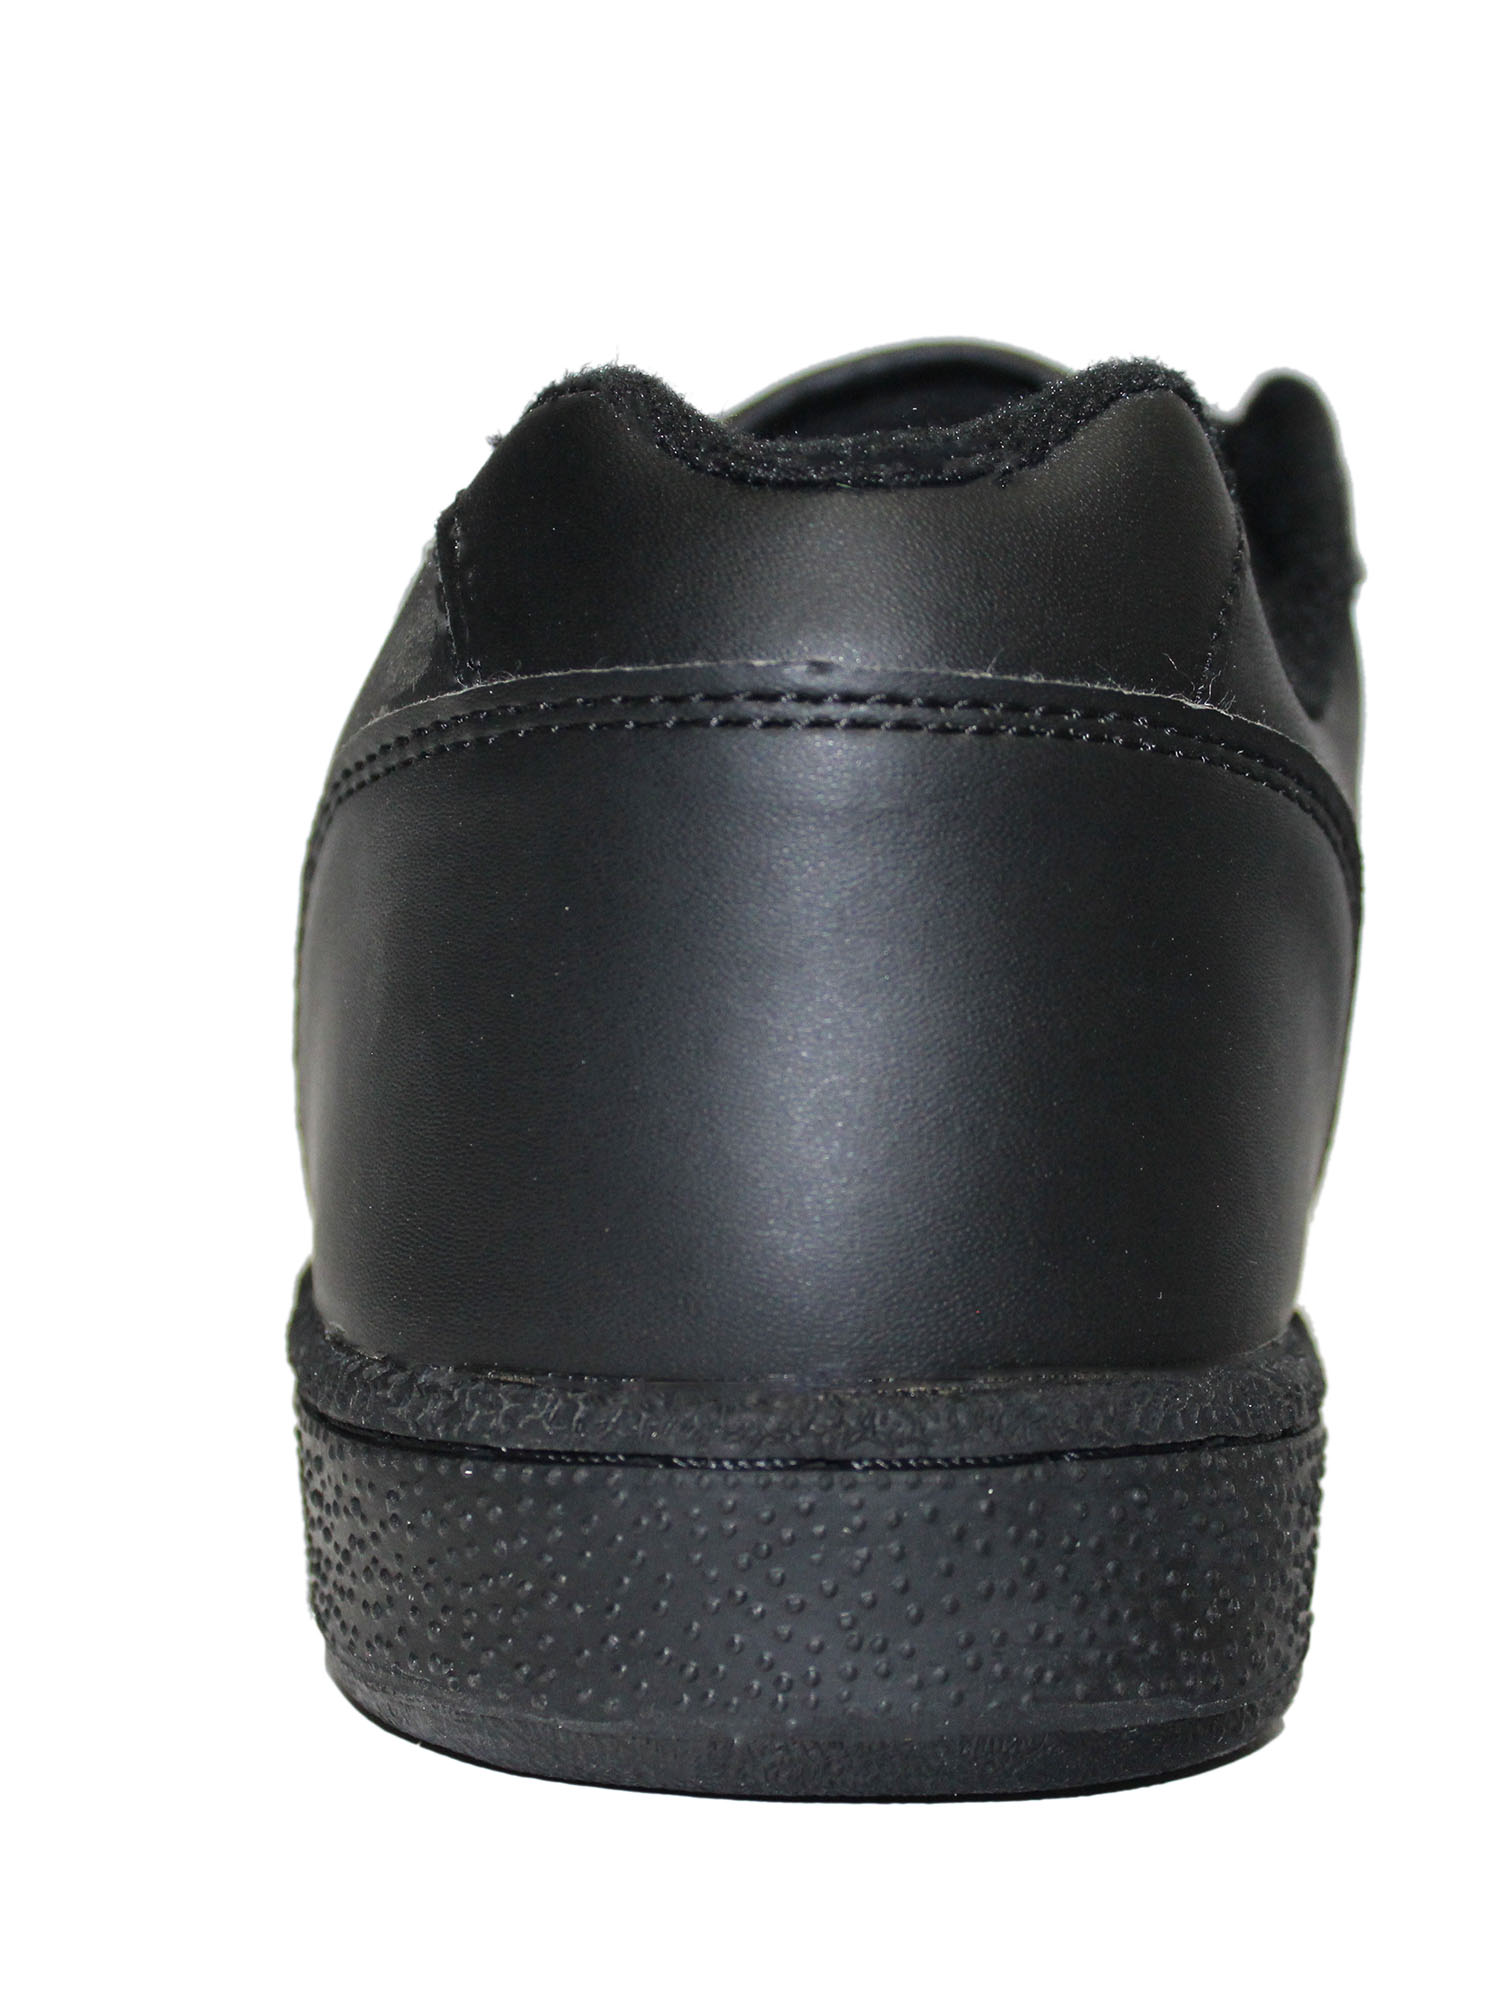 Tanleewa Men's Leather Strap Sneakers Lightweight Hook and Loop Walking Shoe Size 14 Adult Male - image 4 of 4